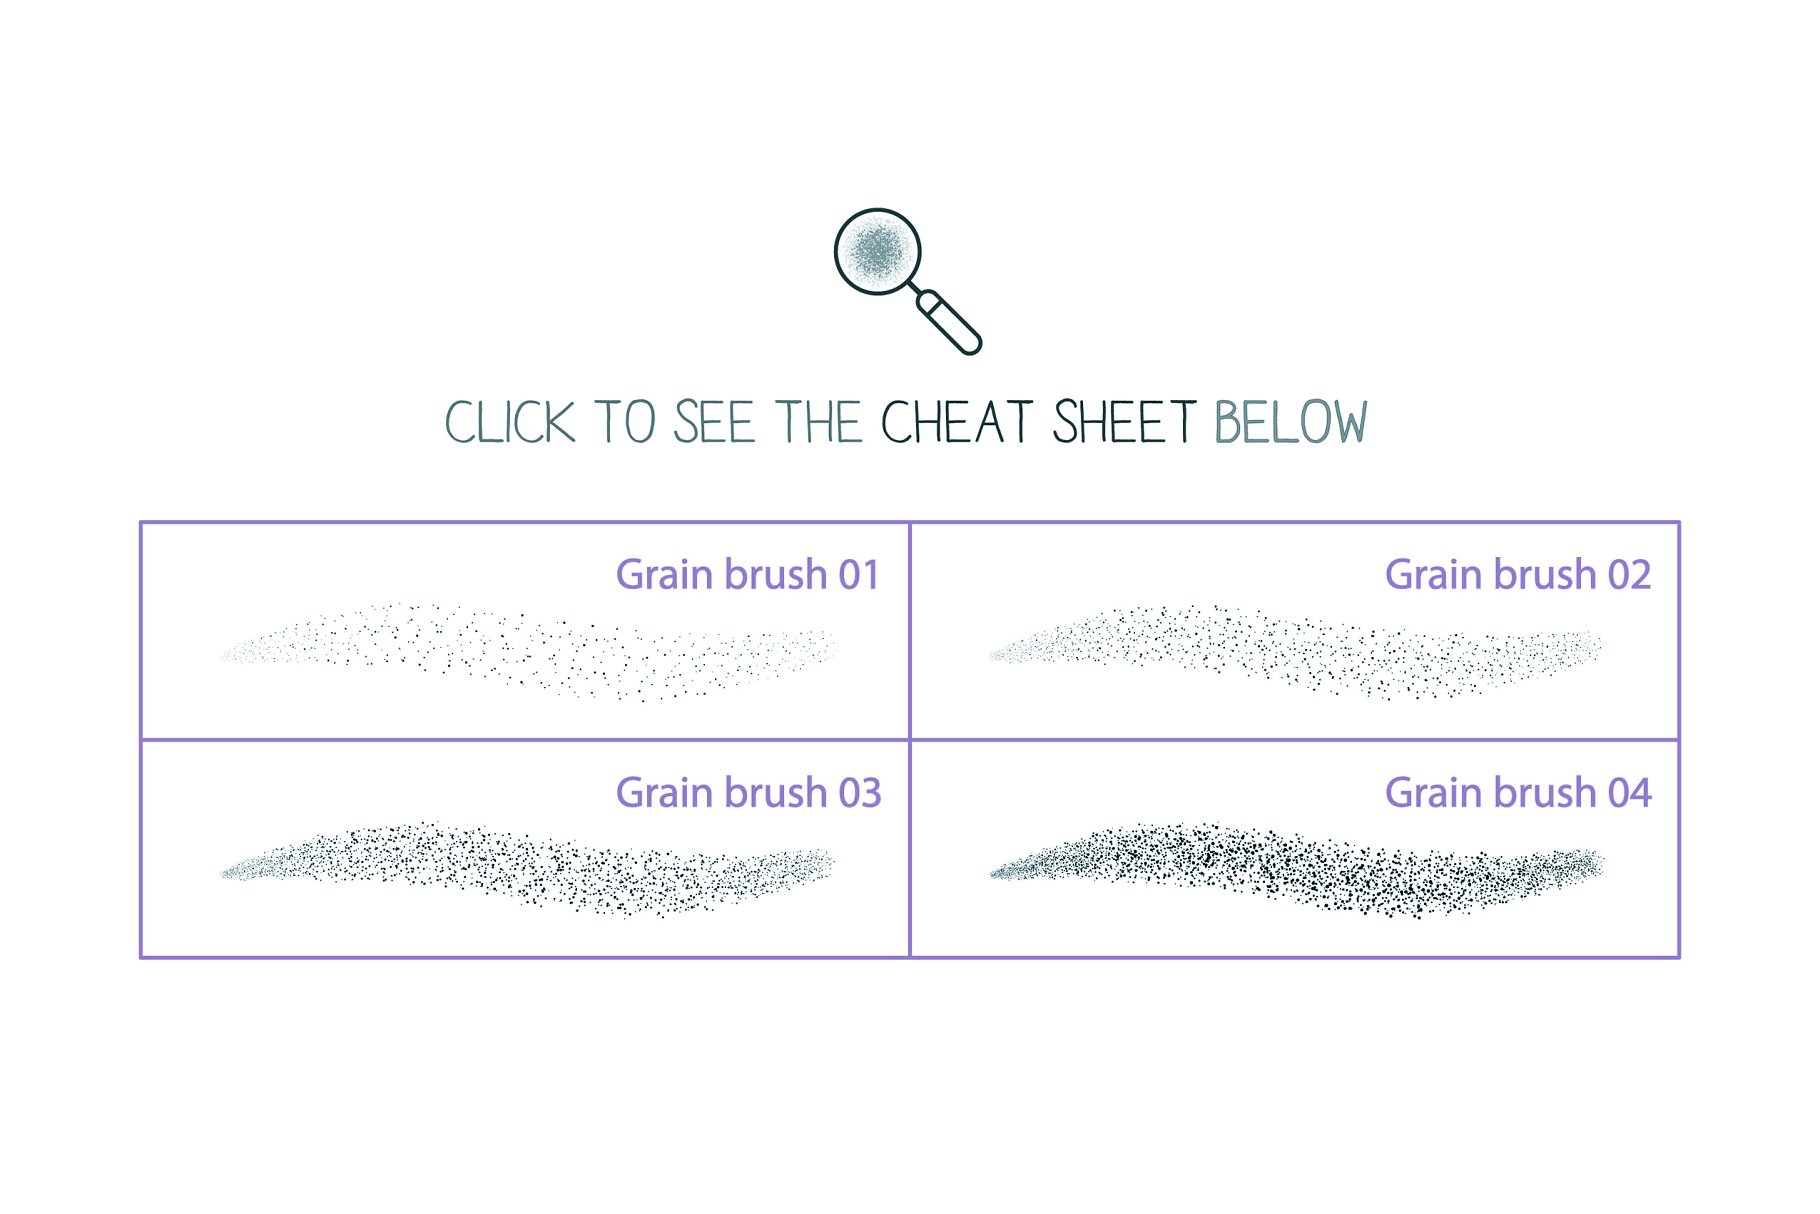 54款粒子/纹理&喷墨AI笔刷 Grain and texture AI brushes插图(3)